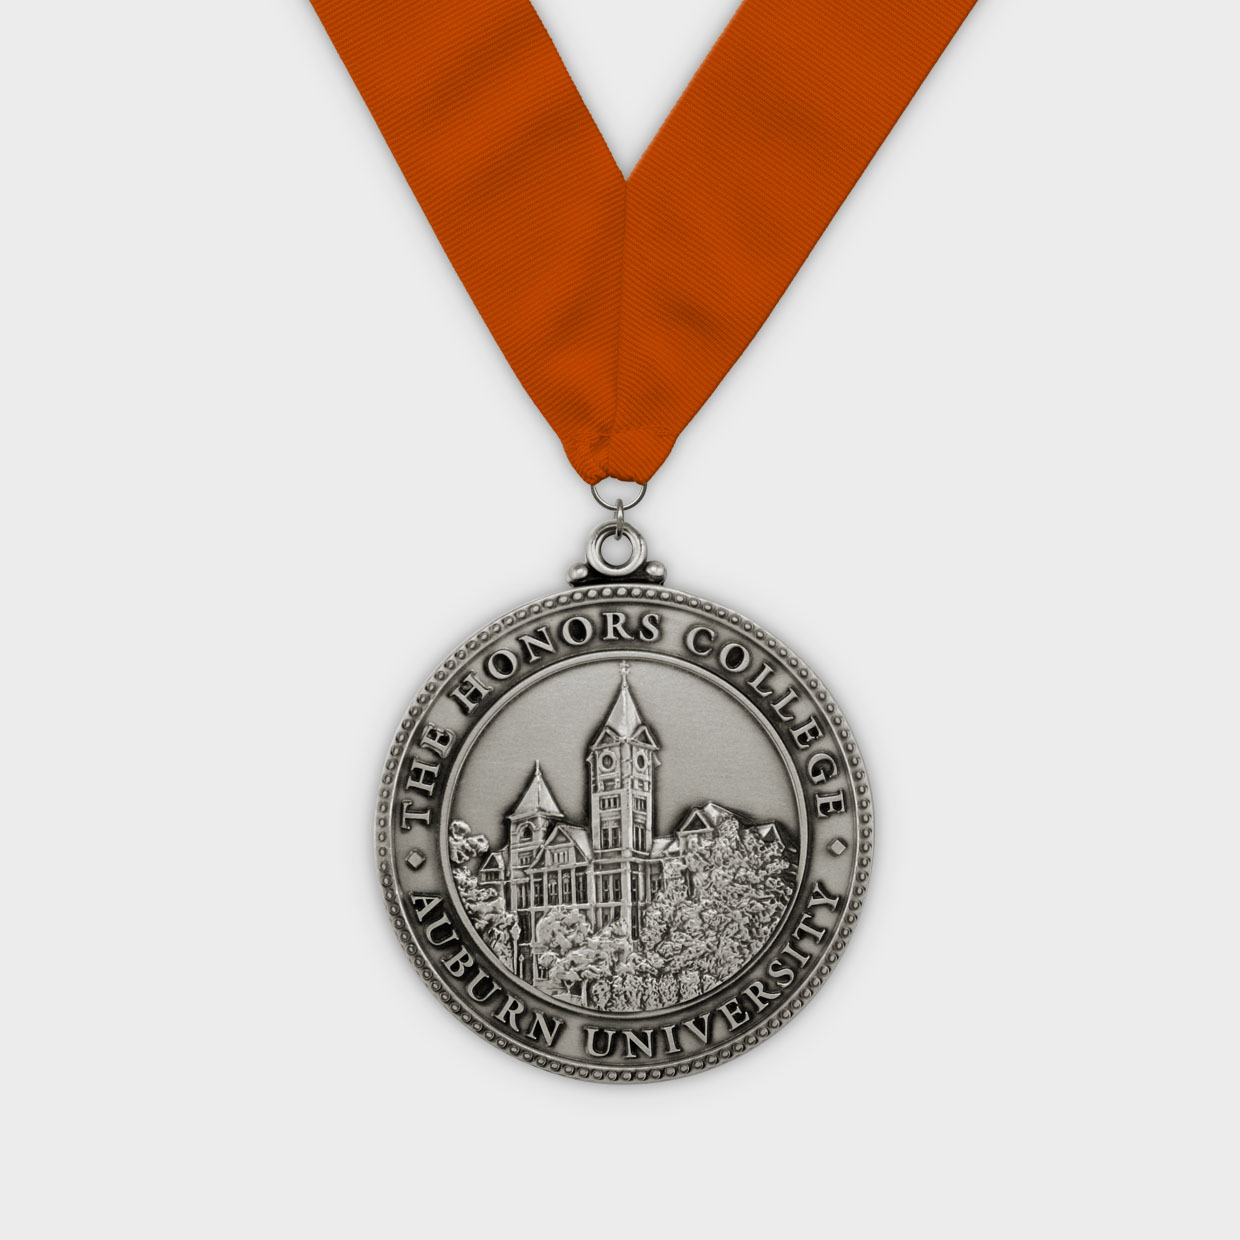 The Honor College Auburn University Medal Obverse